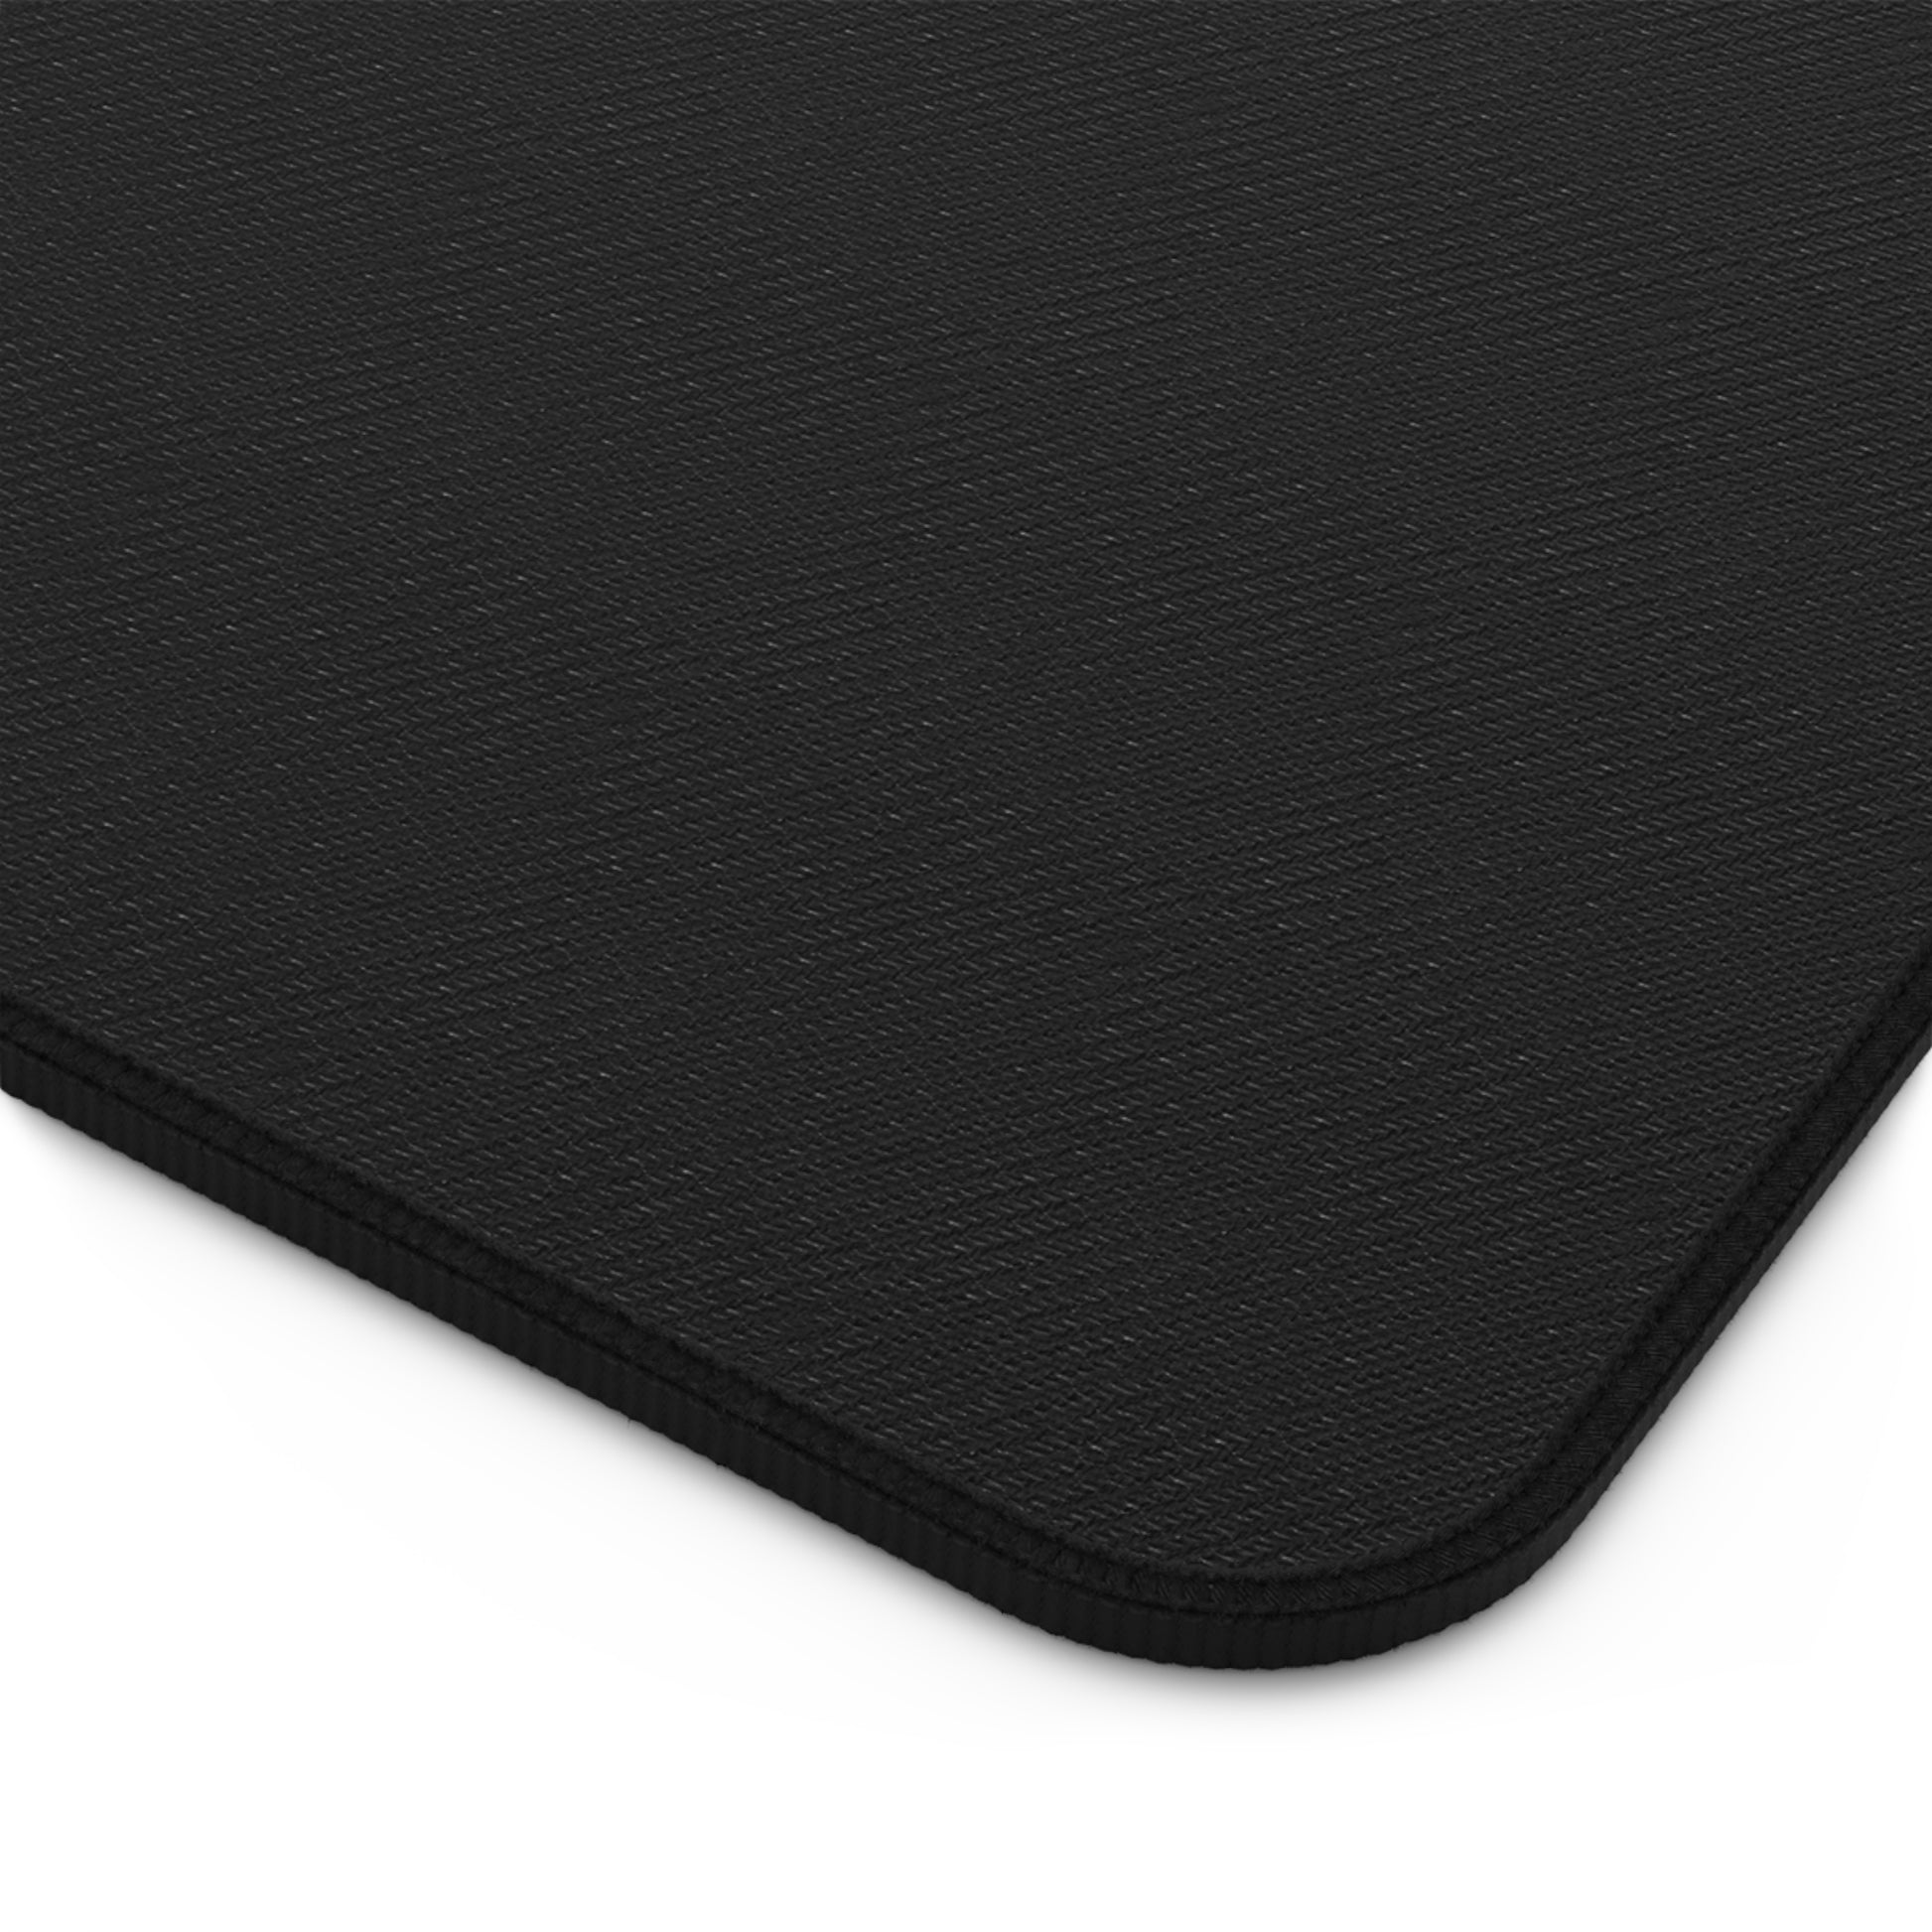 The black rubber bottom of a black and white swirl desk mat.